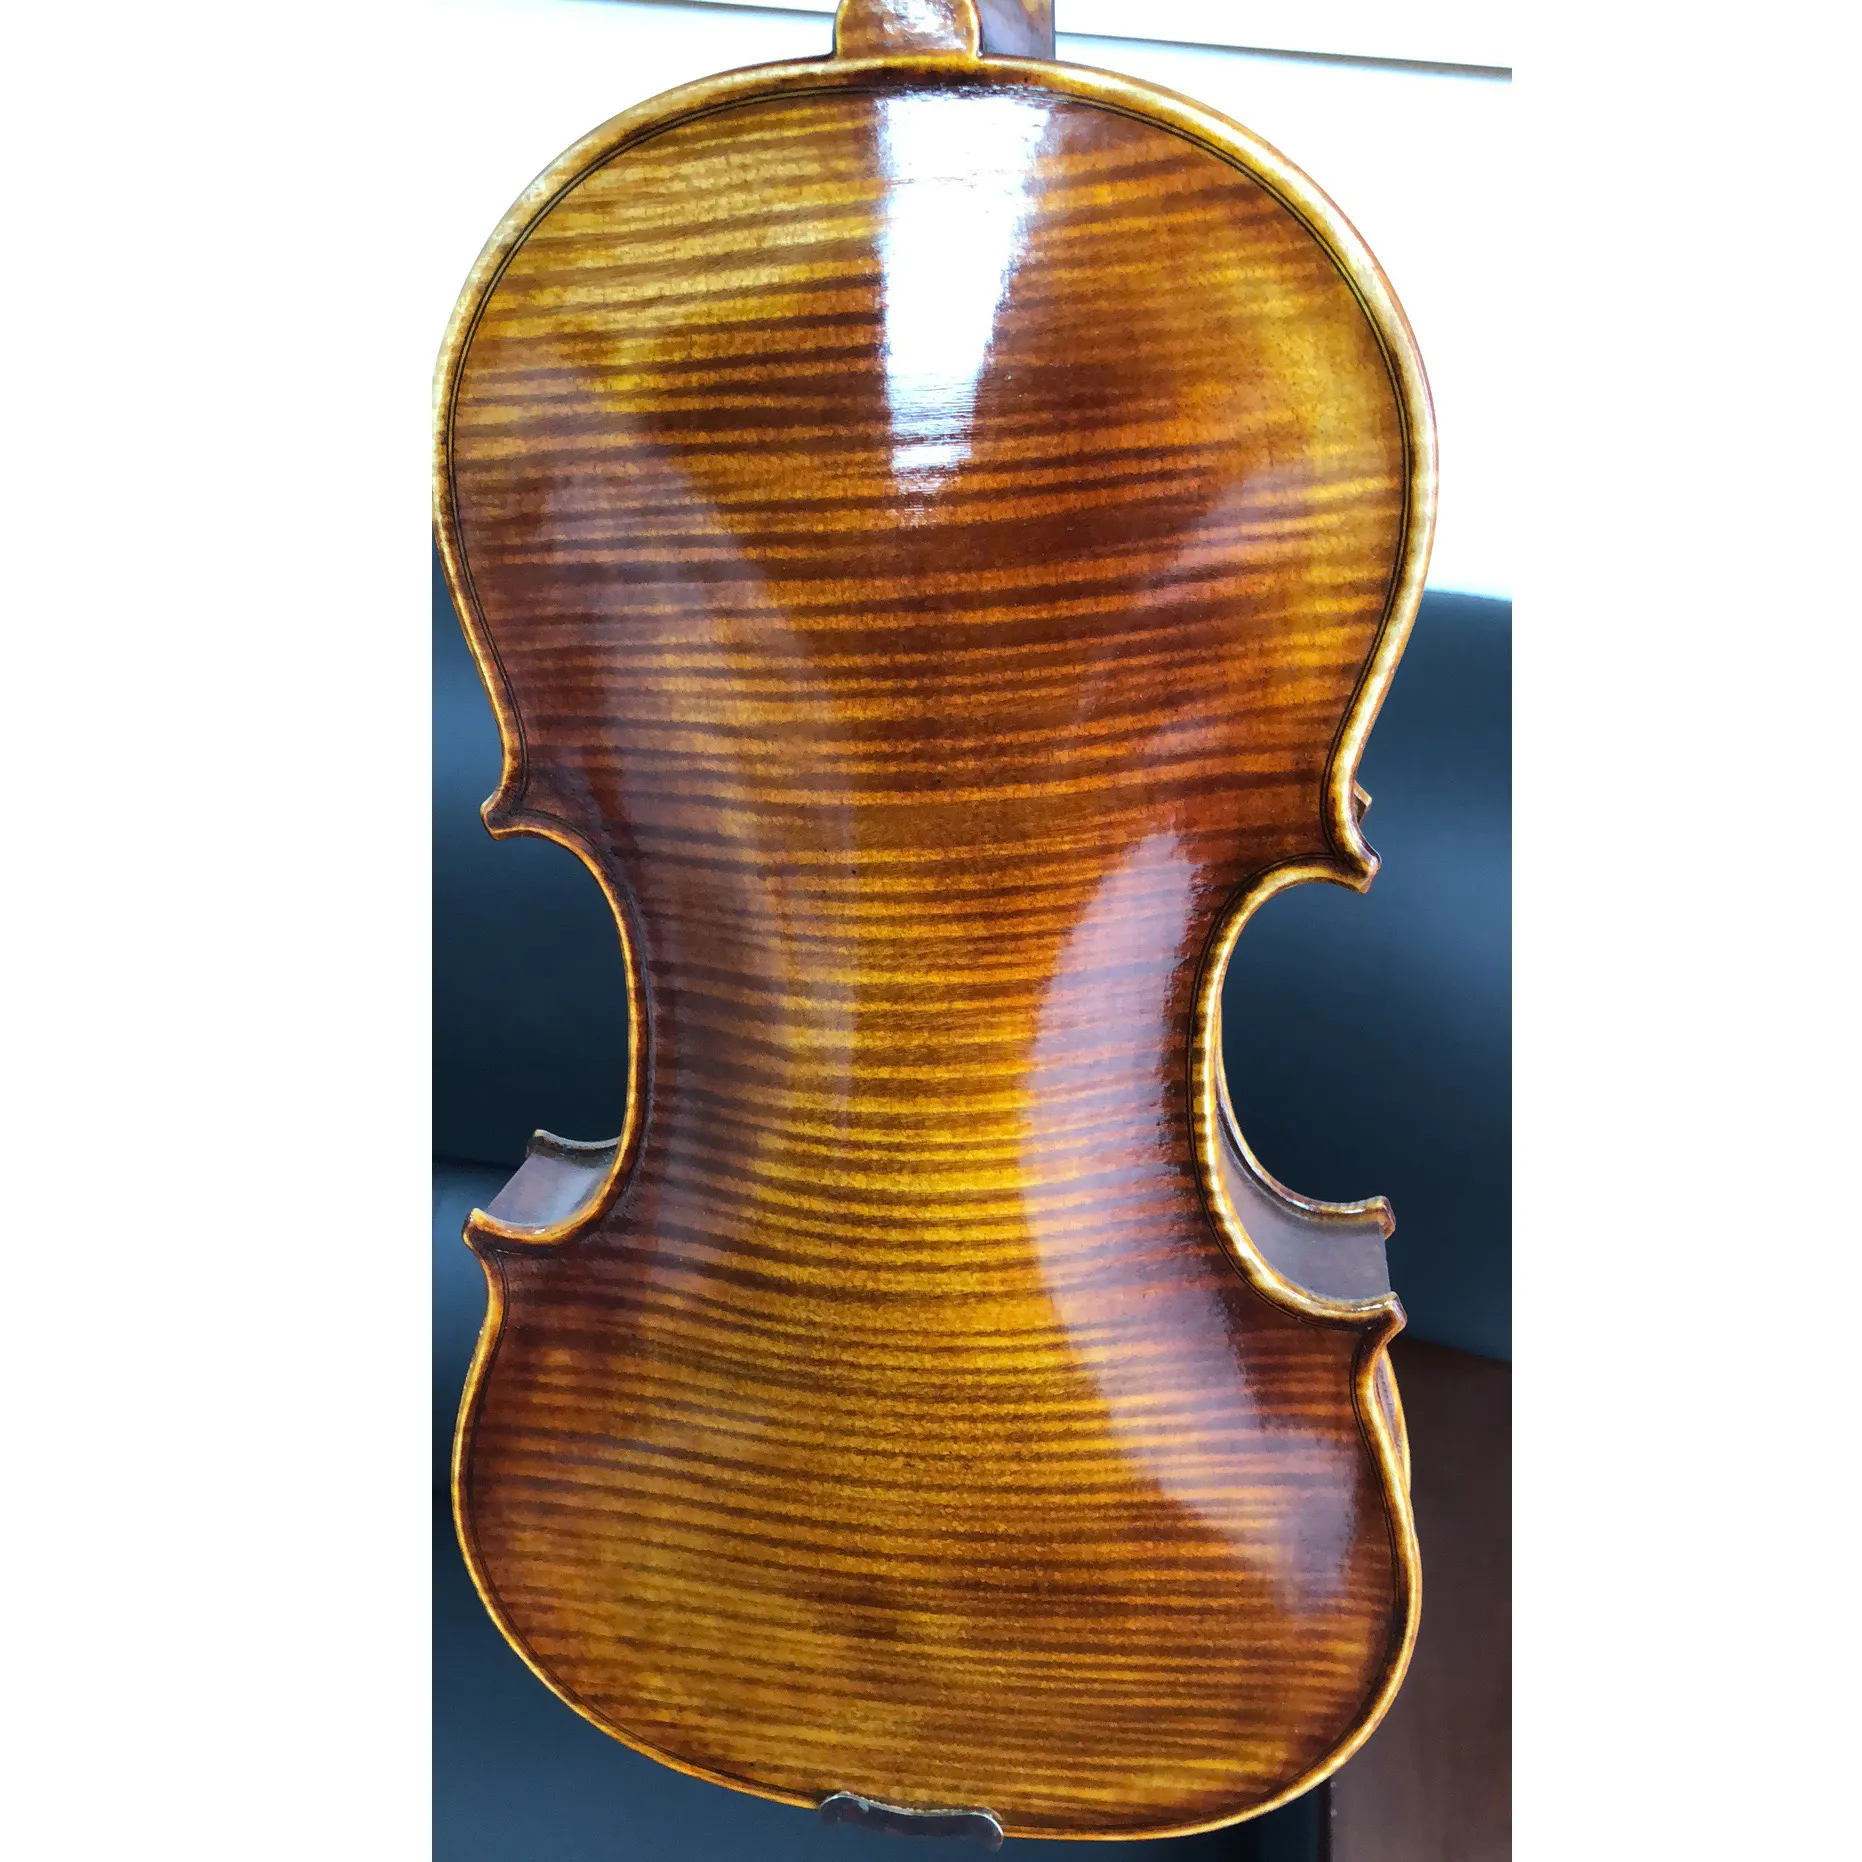 The High Grade Professional Handmade Oil Painting Violin